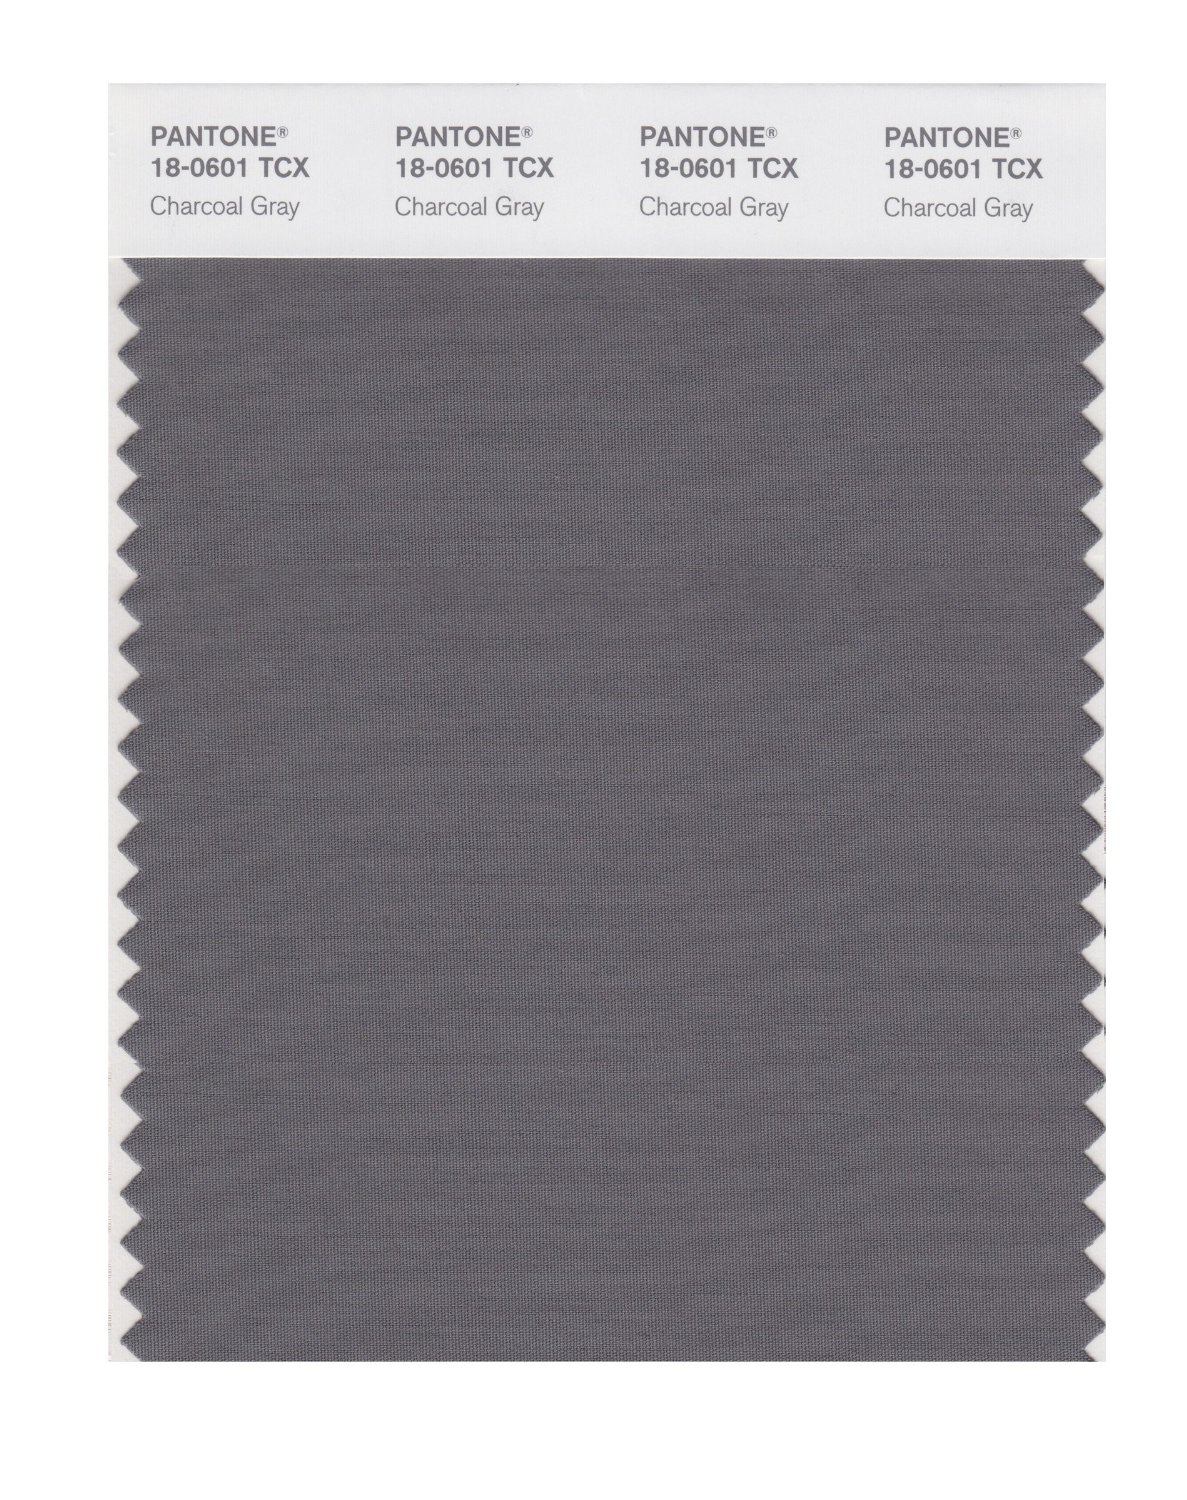 Pantone Cotton Swatch 18-0601 Charcoal Gray